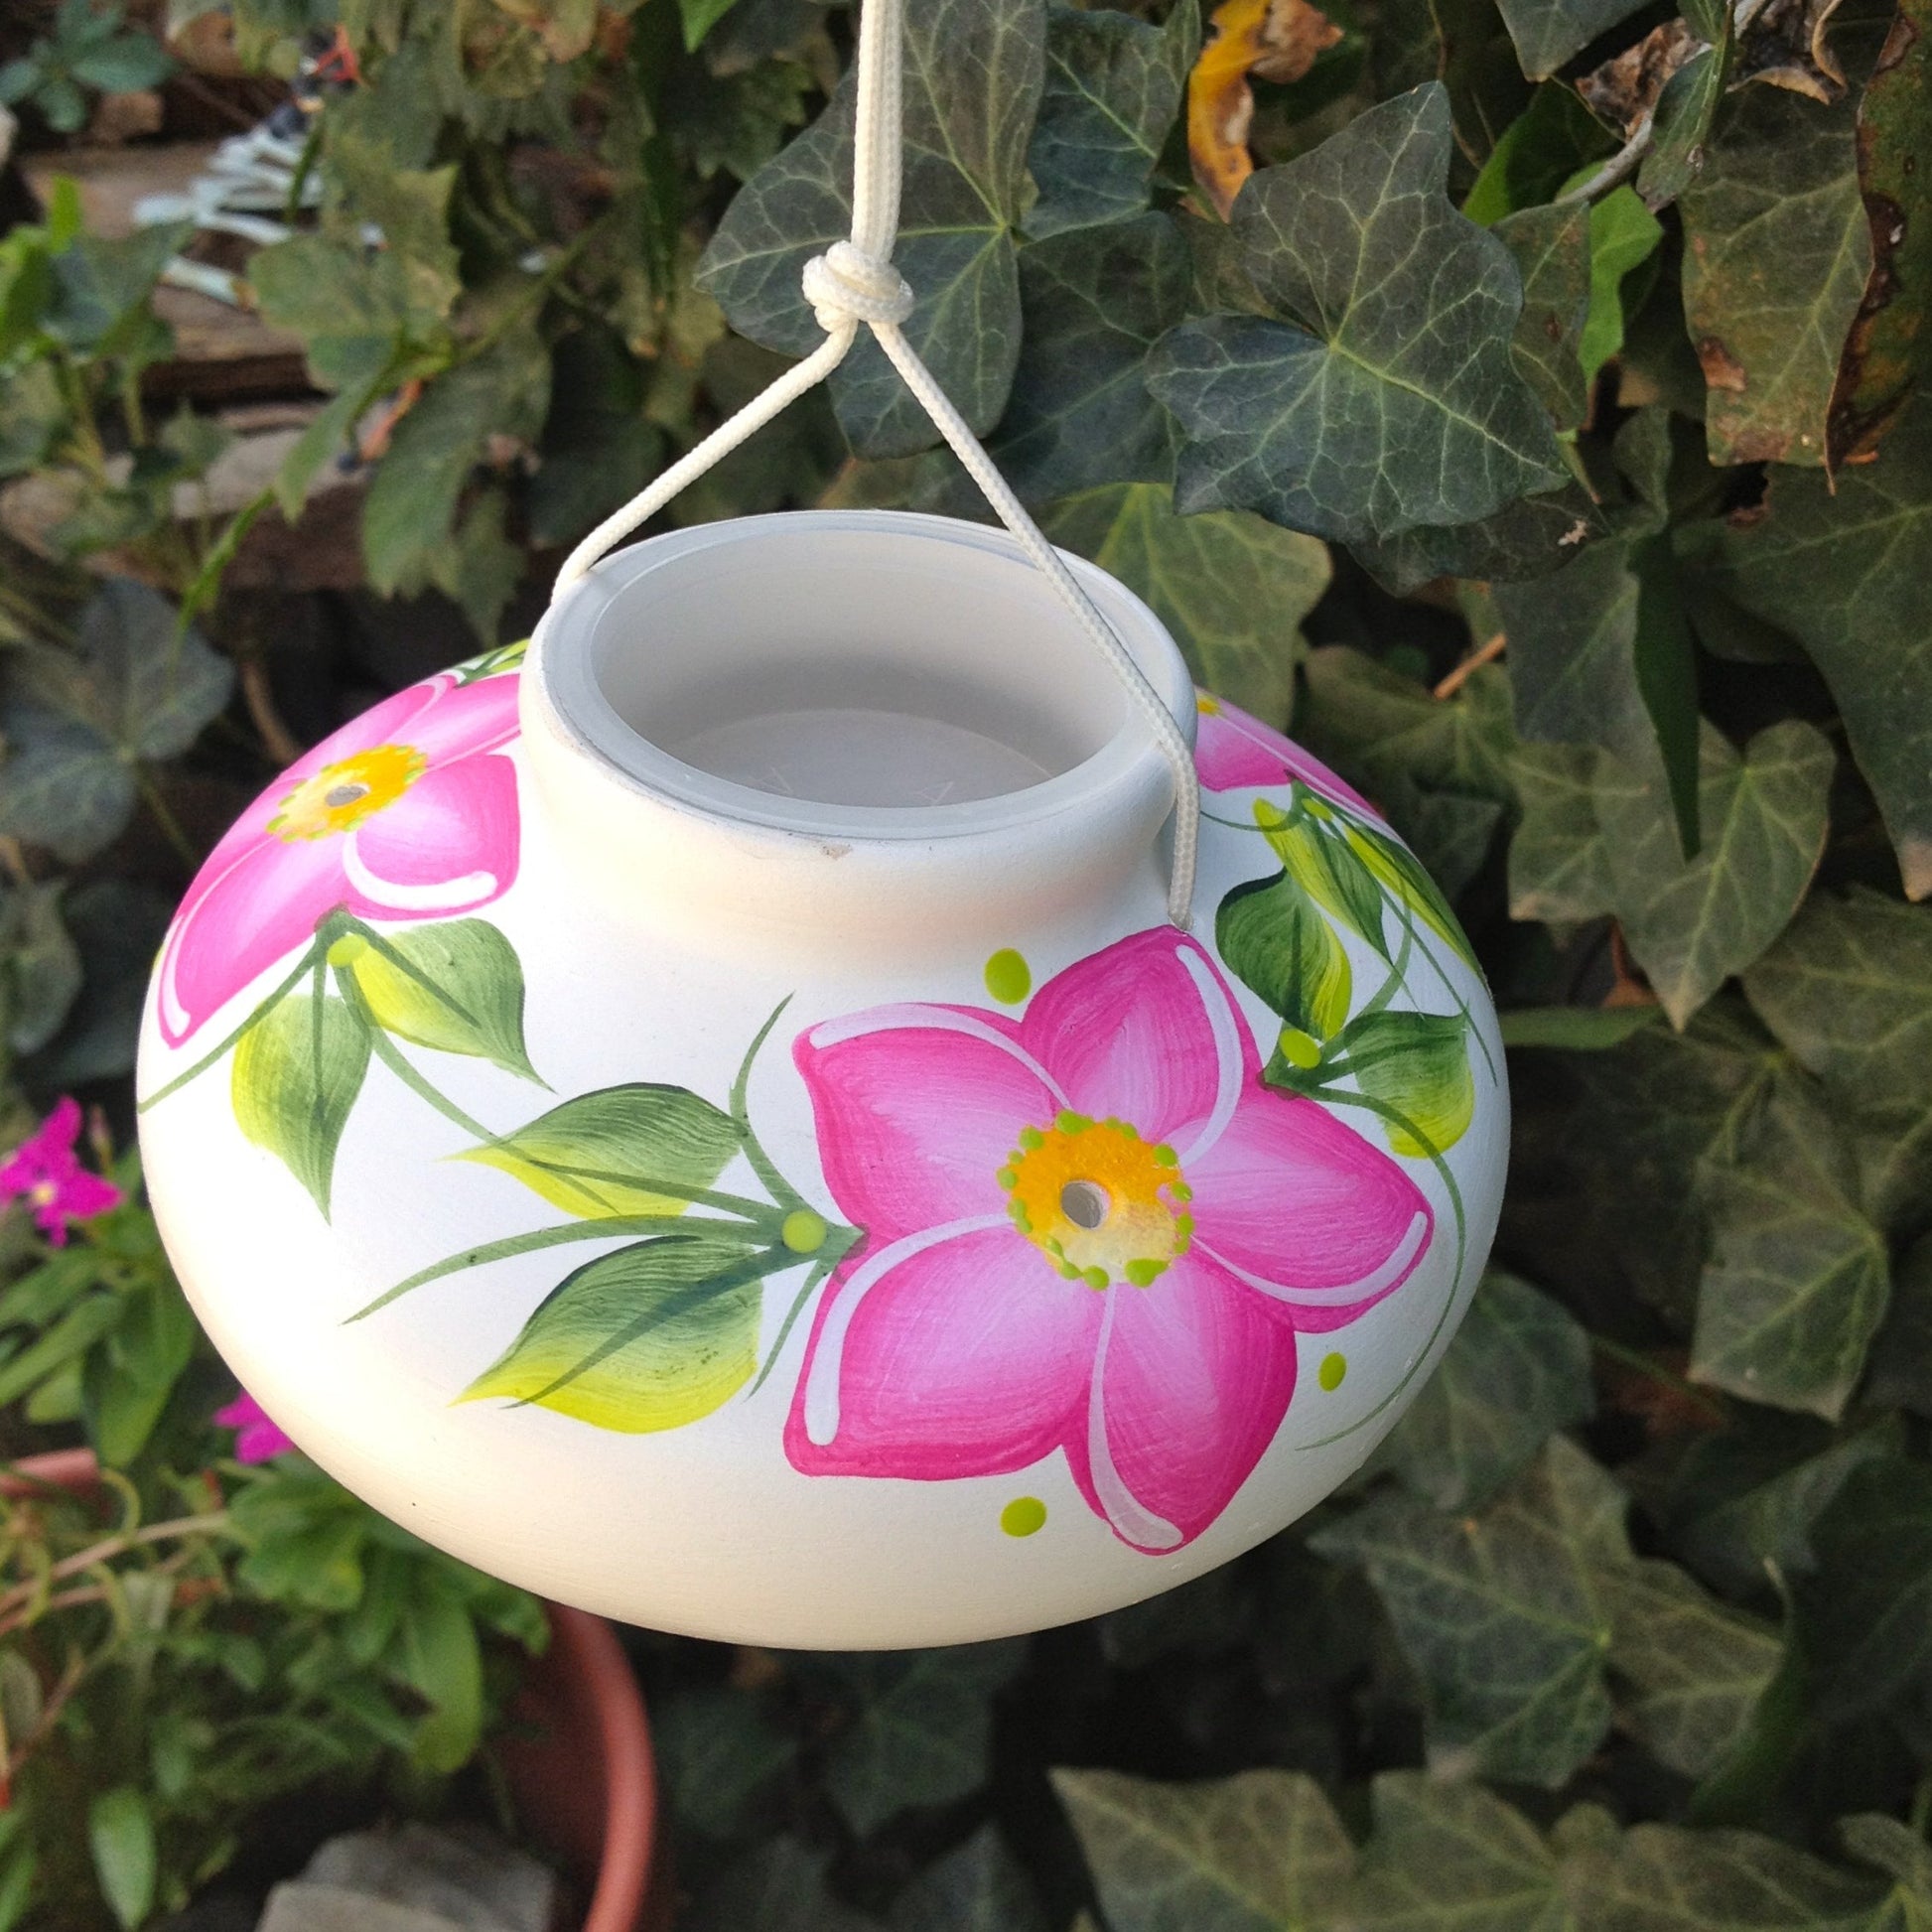 White ceramic hummingbird feeder with hand-painted pink kona flowers